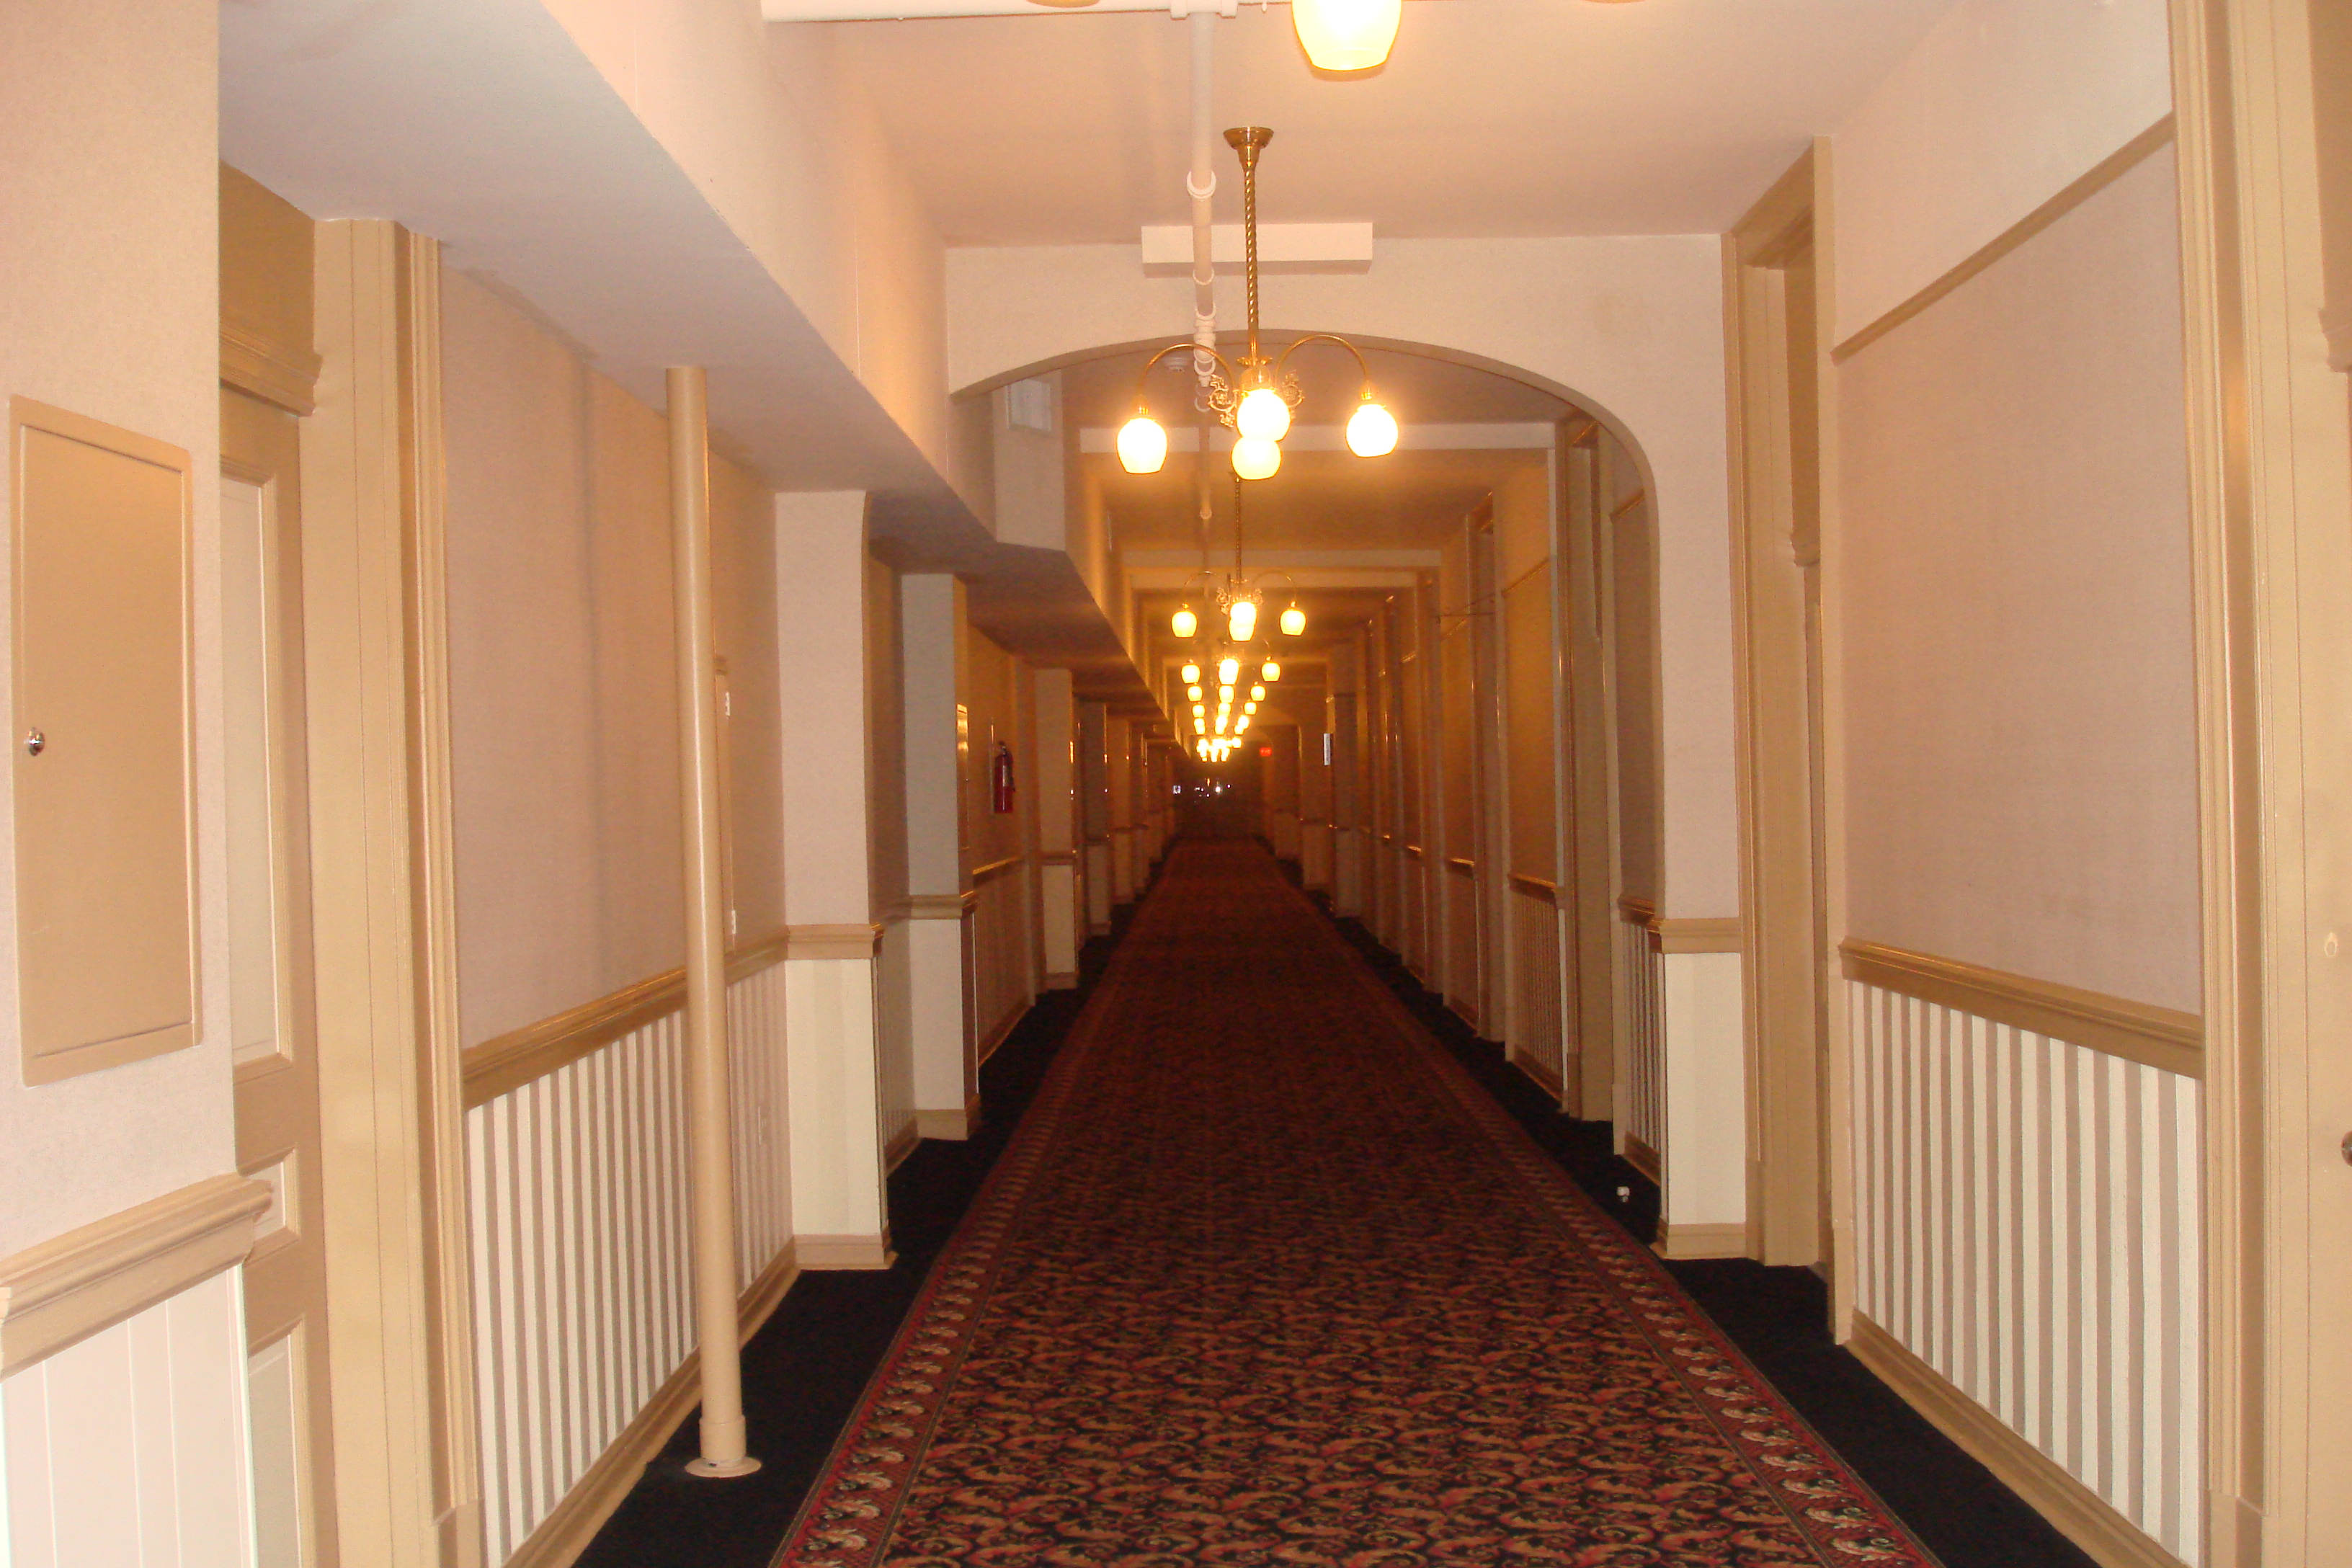 The Shining like Biltmore Hotel